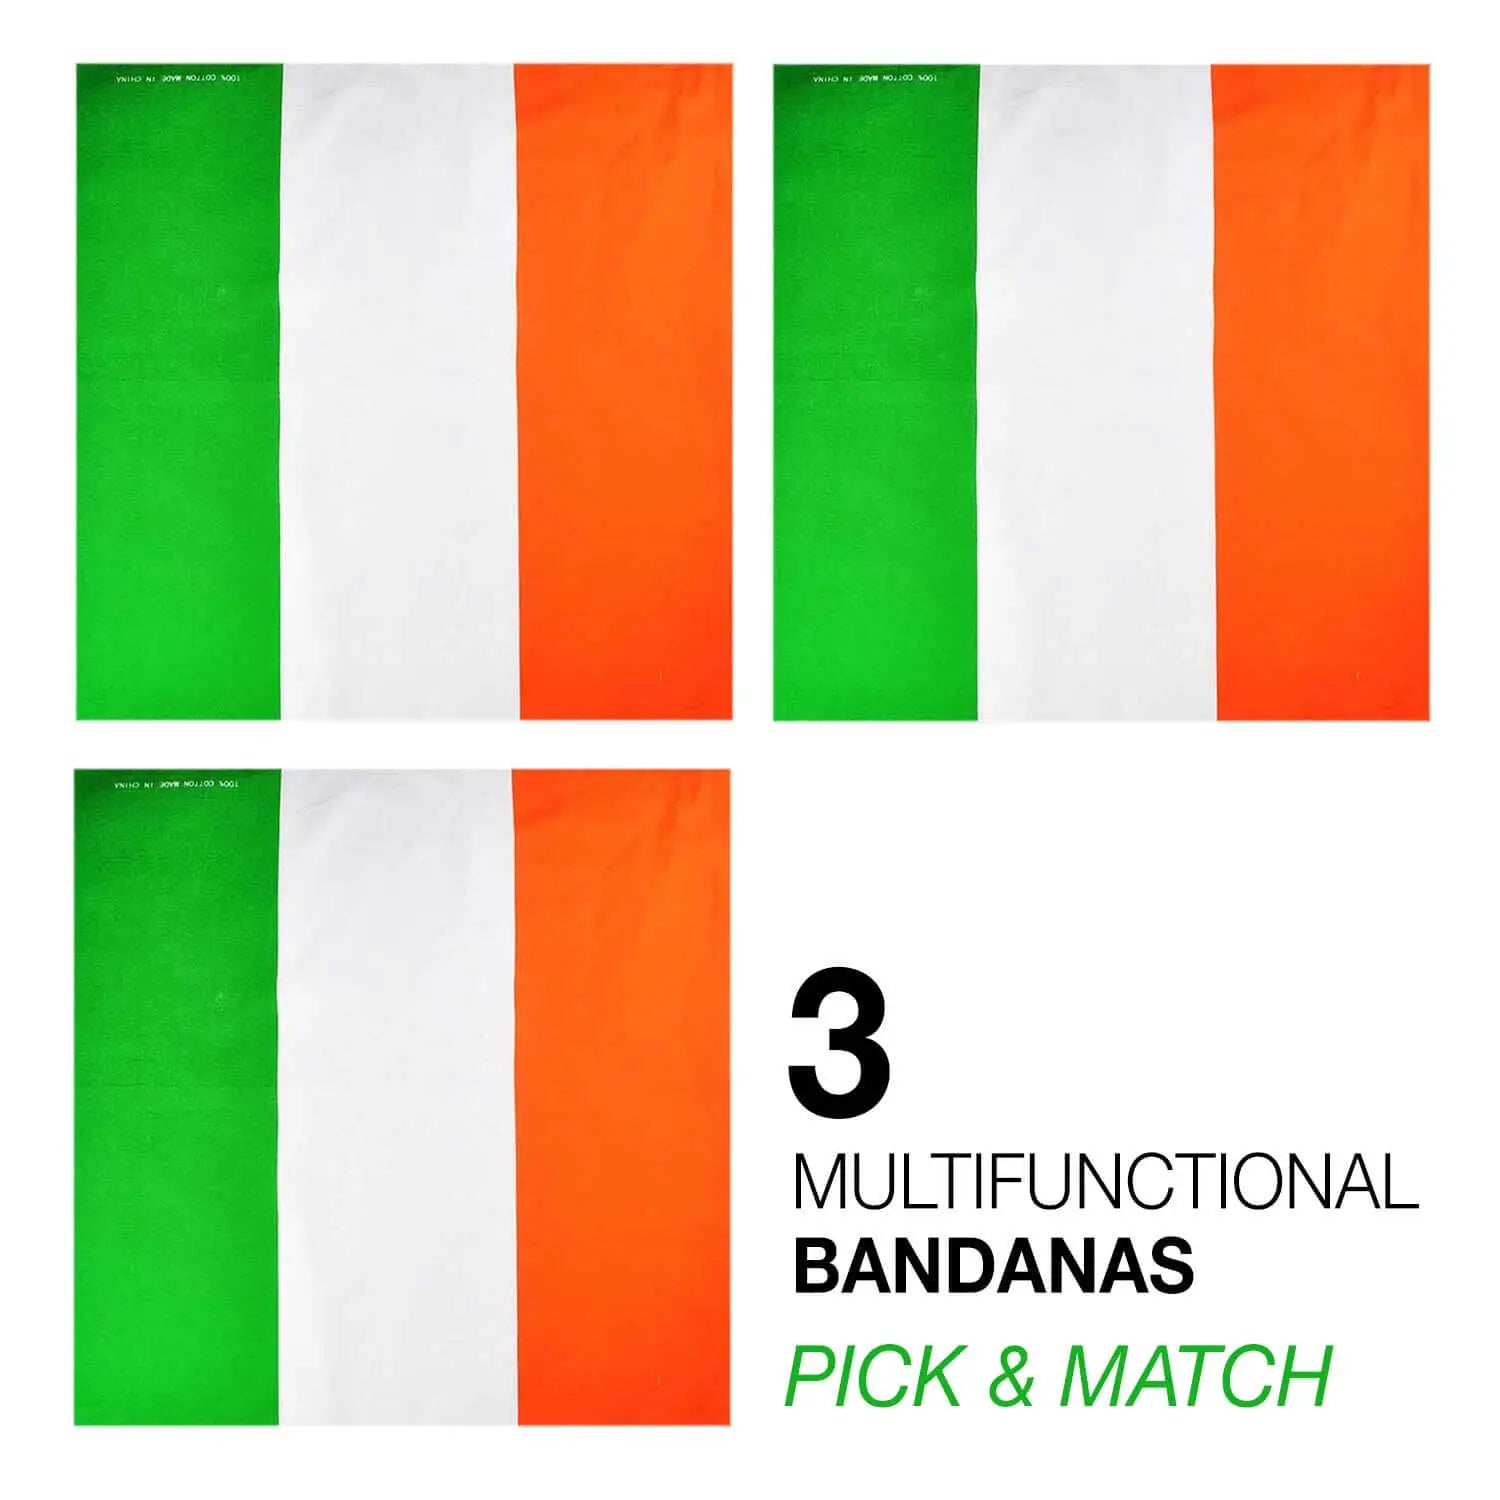 Irish flag bandana set featuring the national flag of Ireland running vertically.